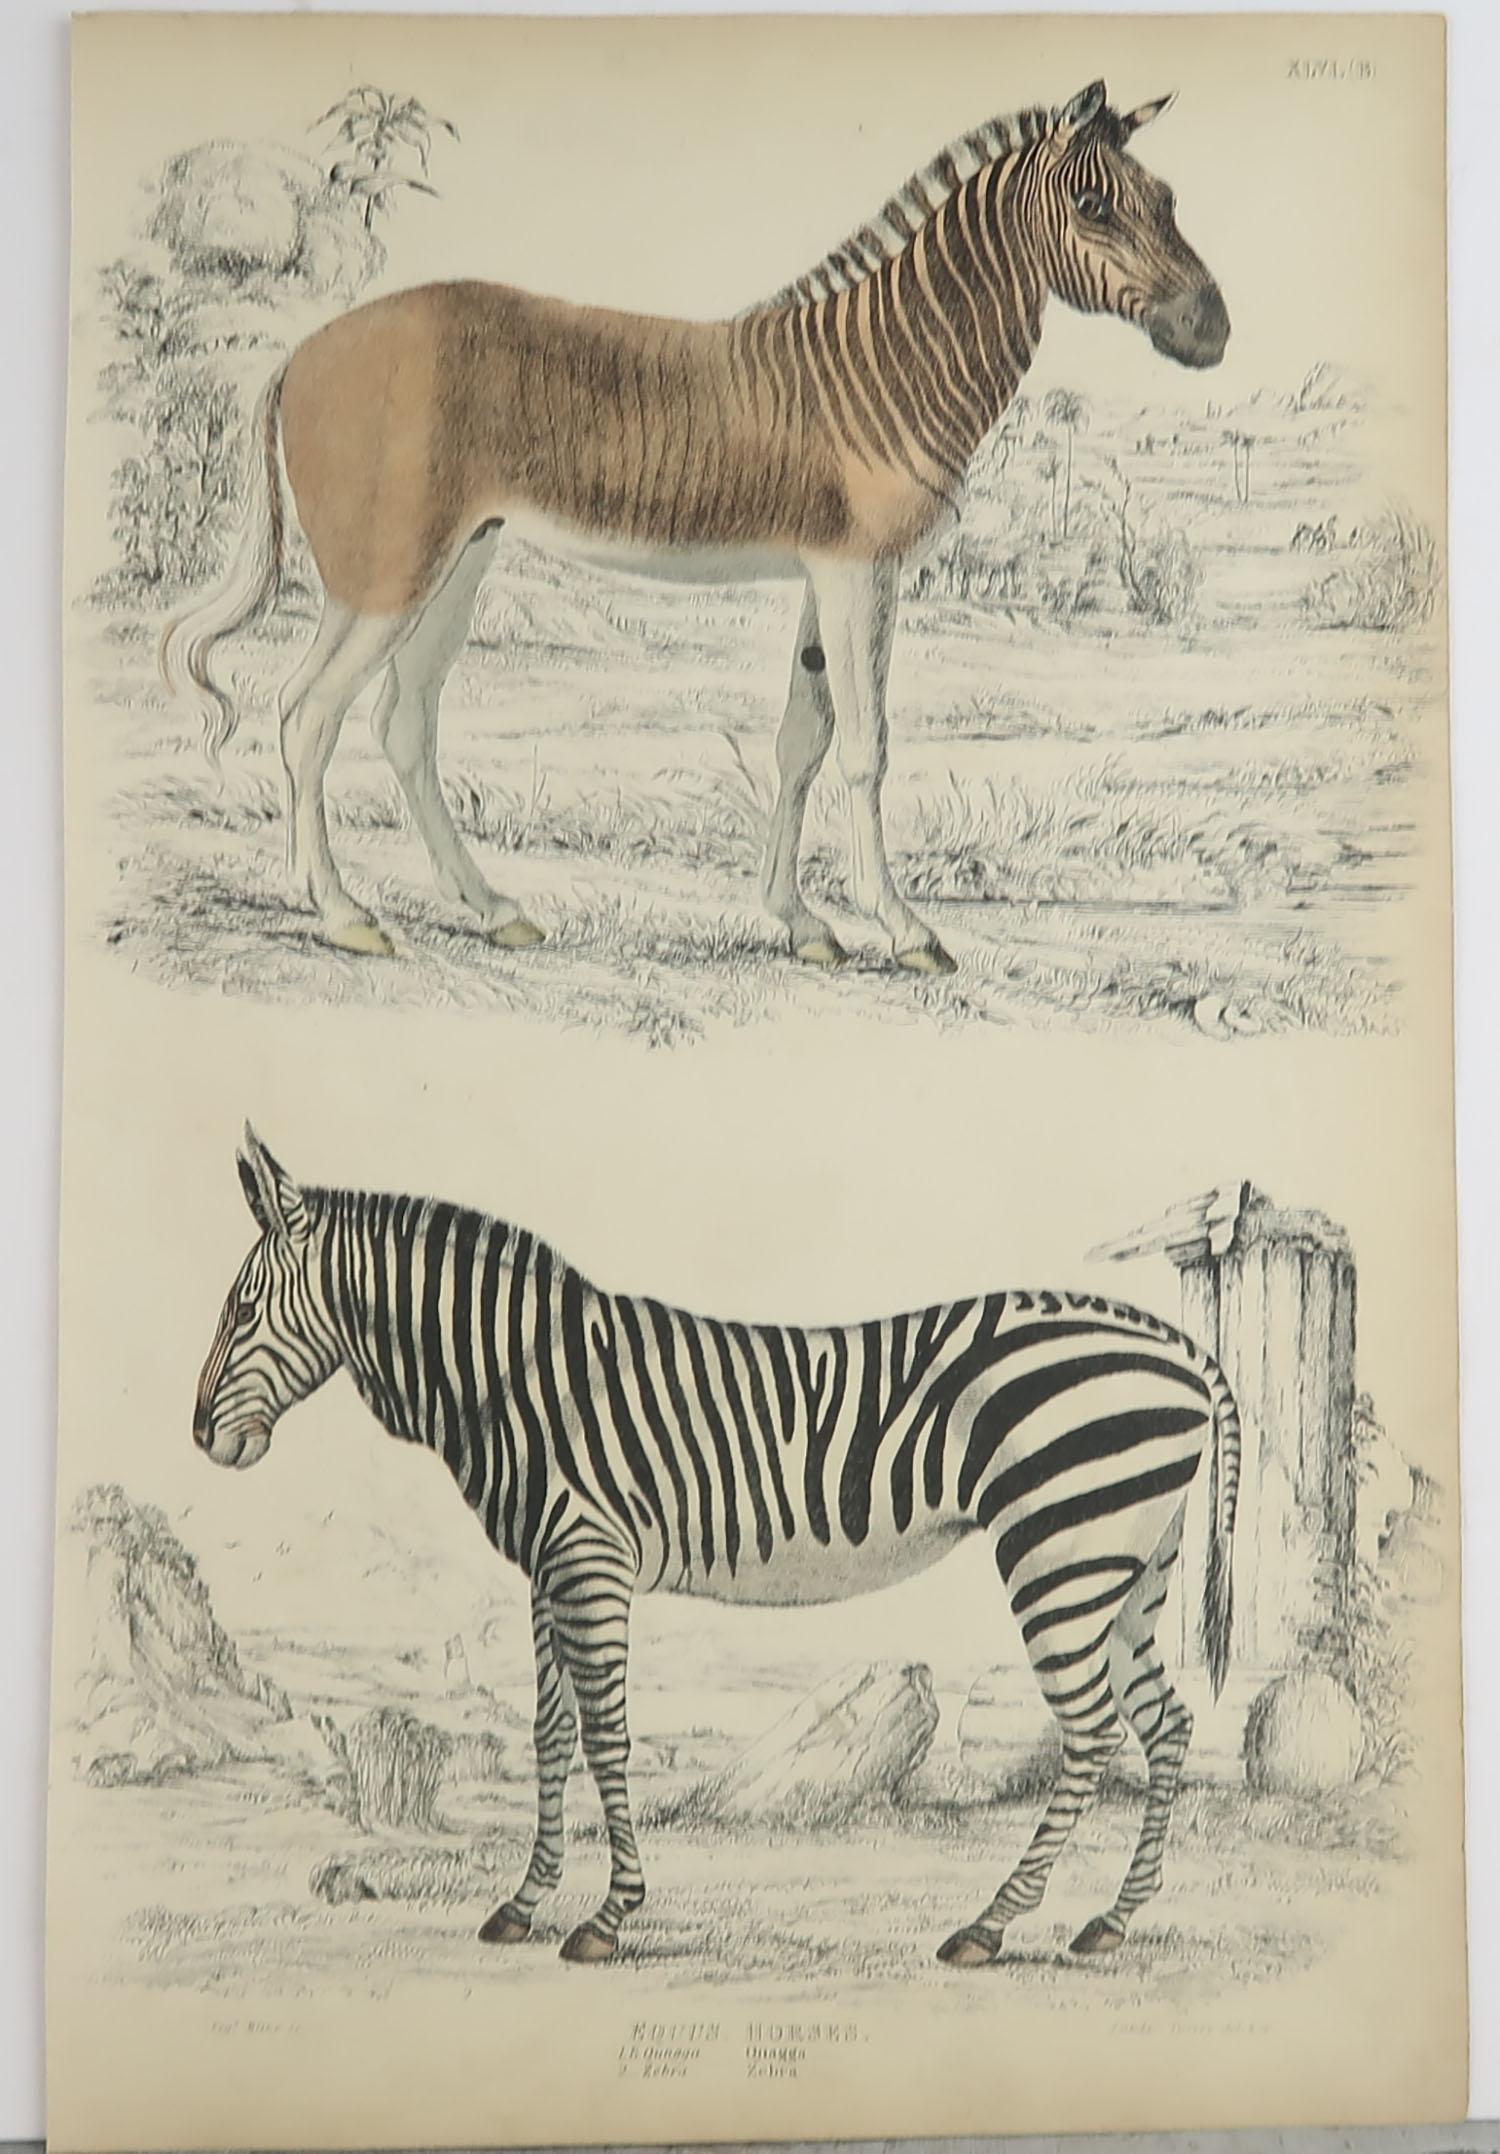 Folk Art Large Original Antique Natural History Print, Zebra and Quagga, circa 1835